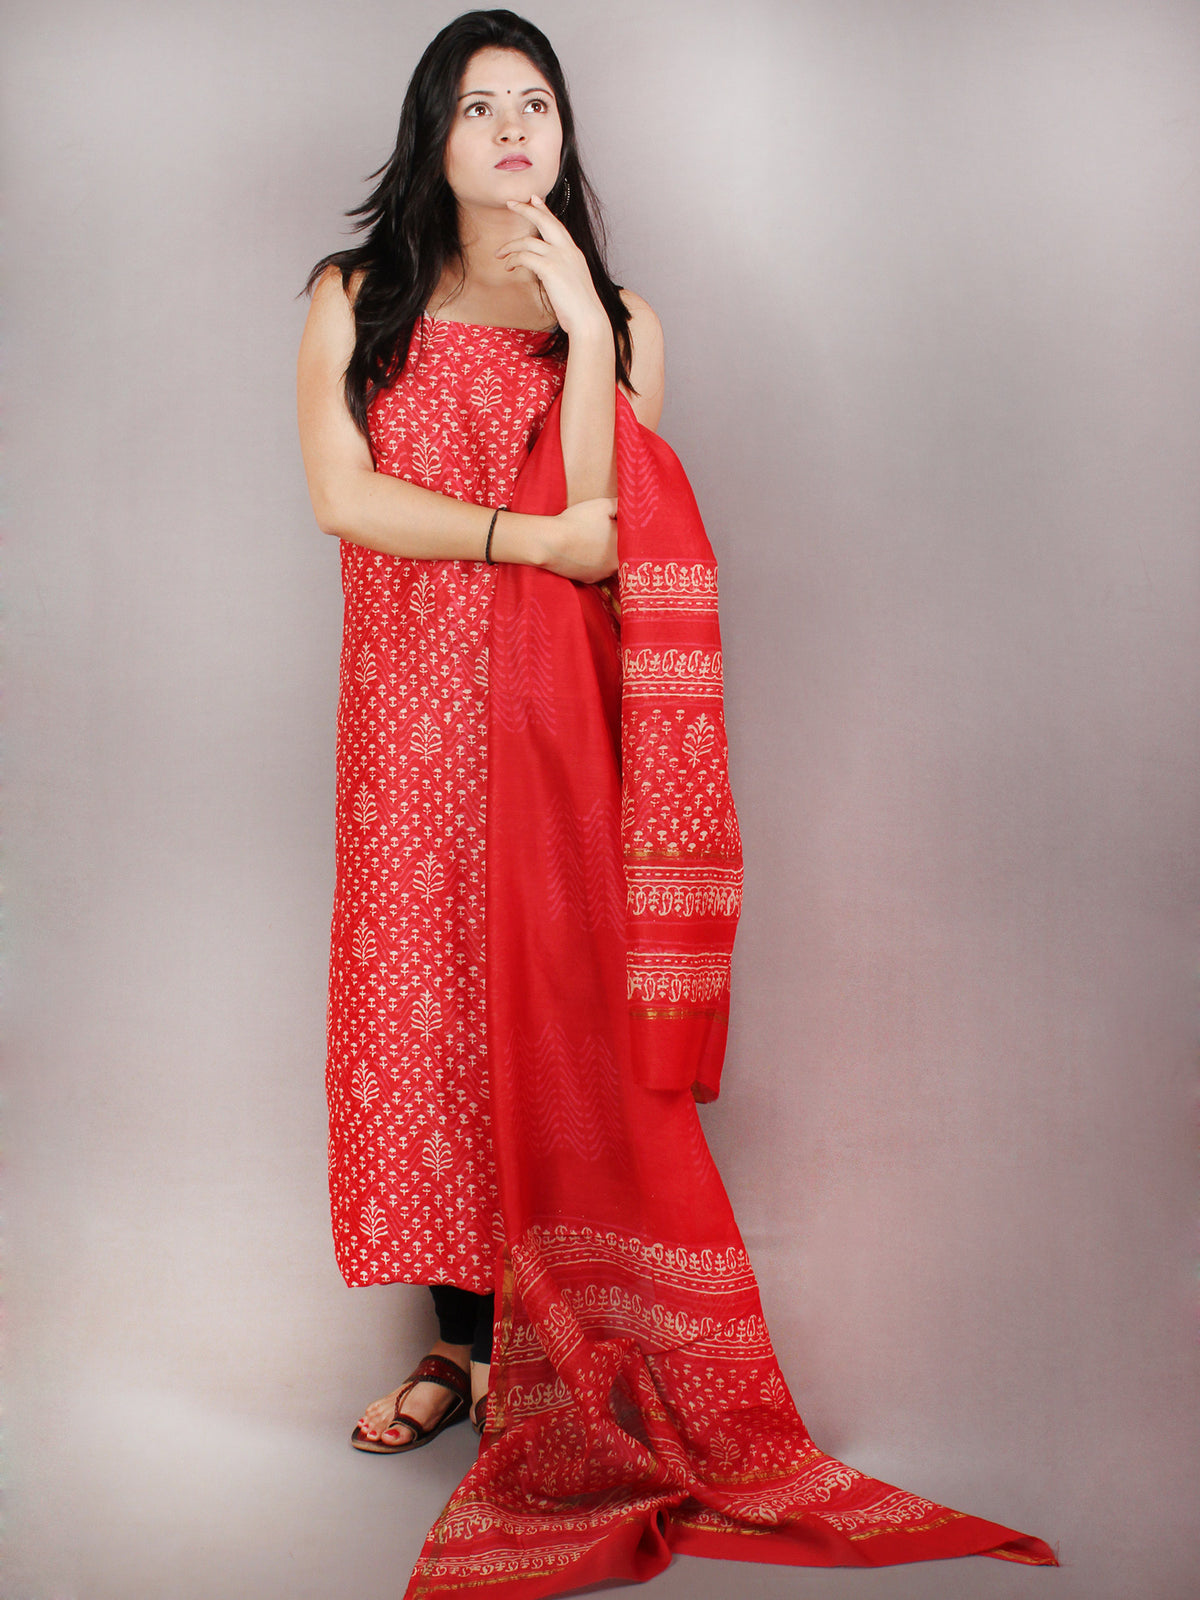 Deep Red Beige Brown Hand Block Printed Chanderi Kurta-Salwar Fabric With Chanderi Dupatta - S1628086